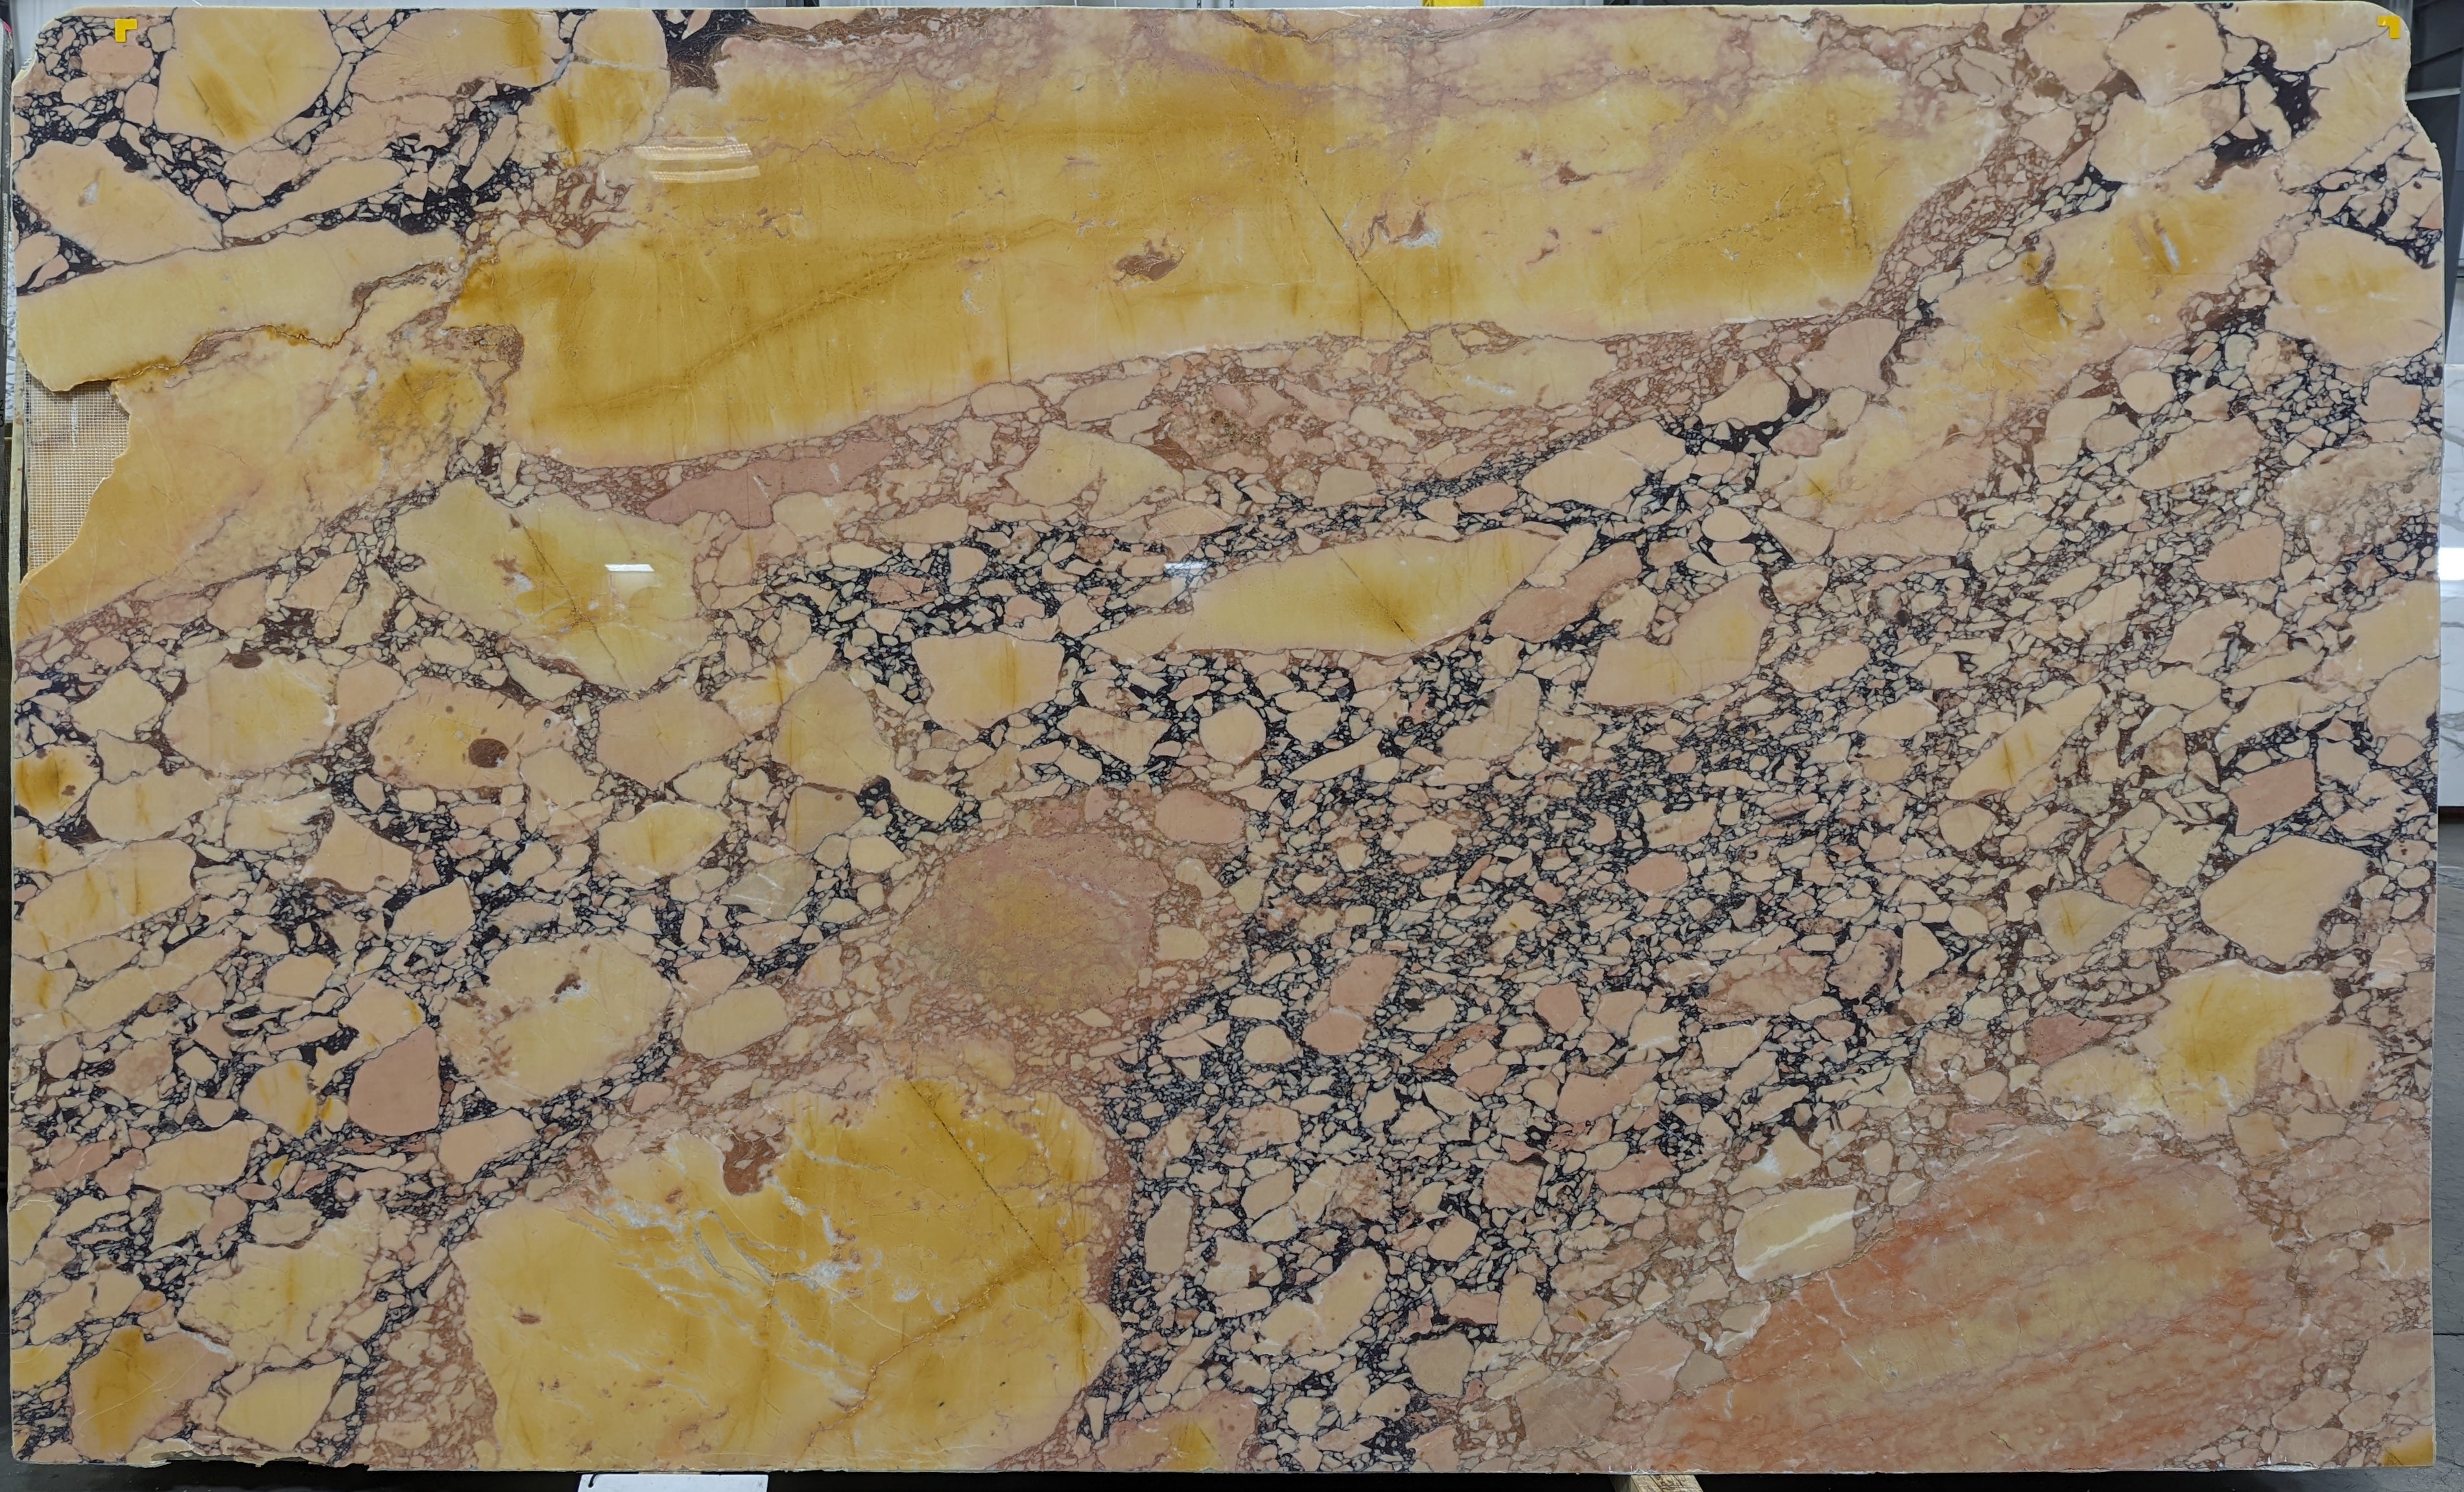  Breccia Scoppio Marble Slab 3/4  Polished Stone - 26117#51 -  69x111 